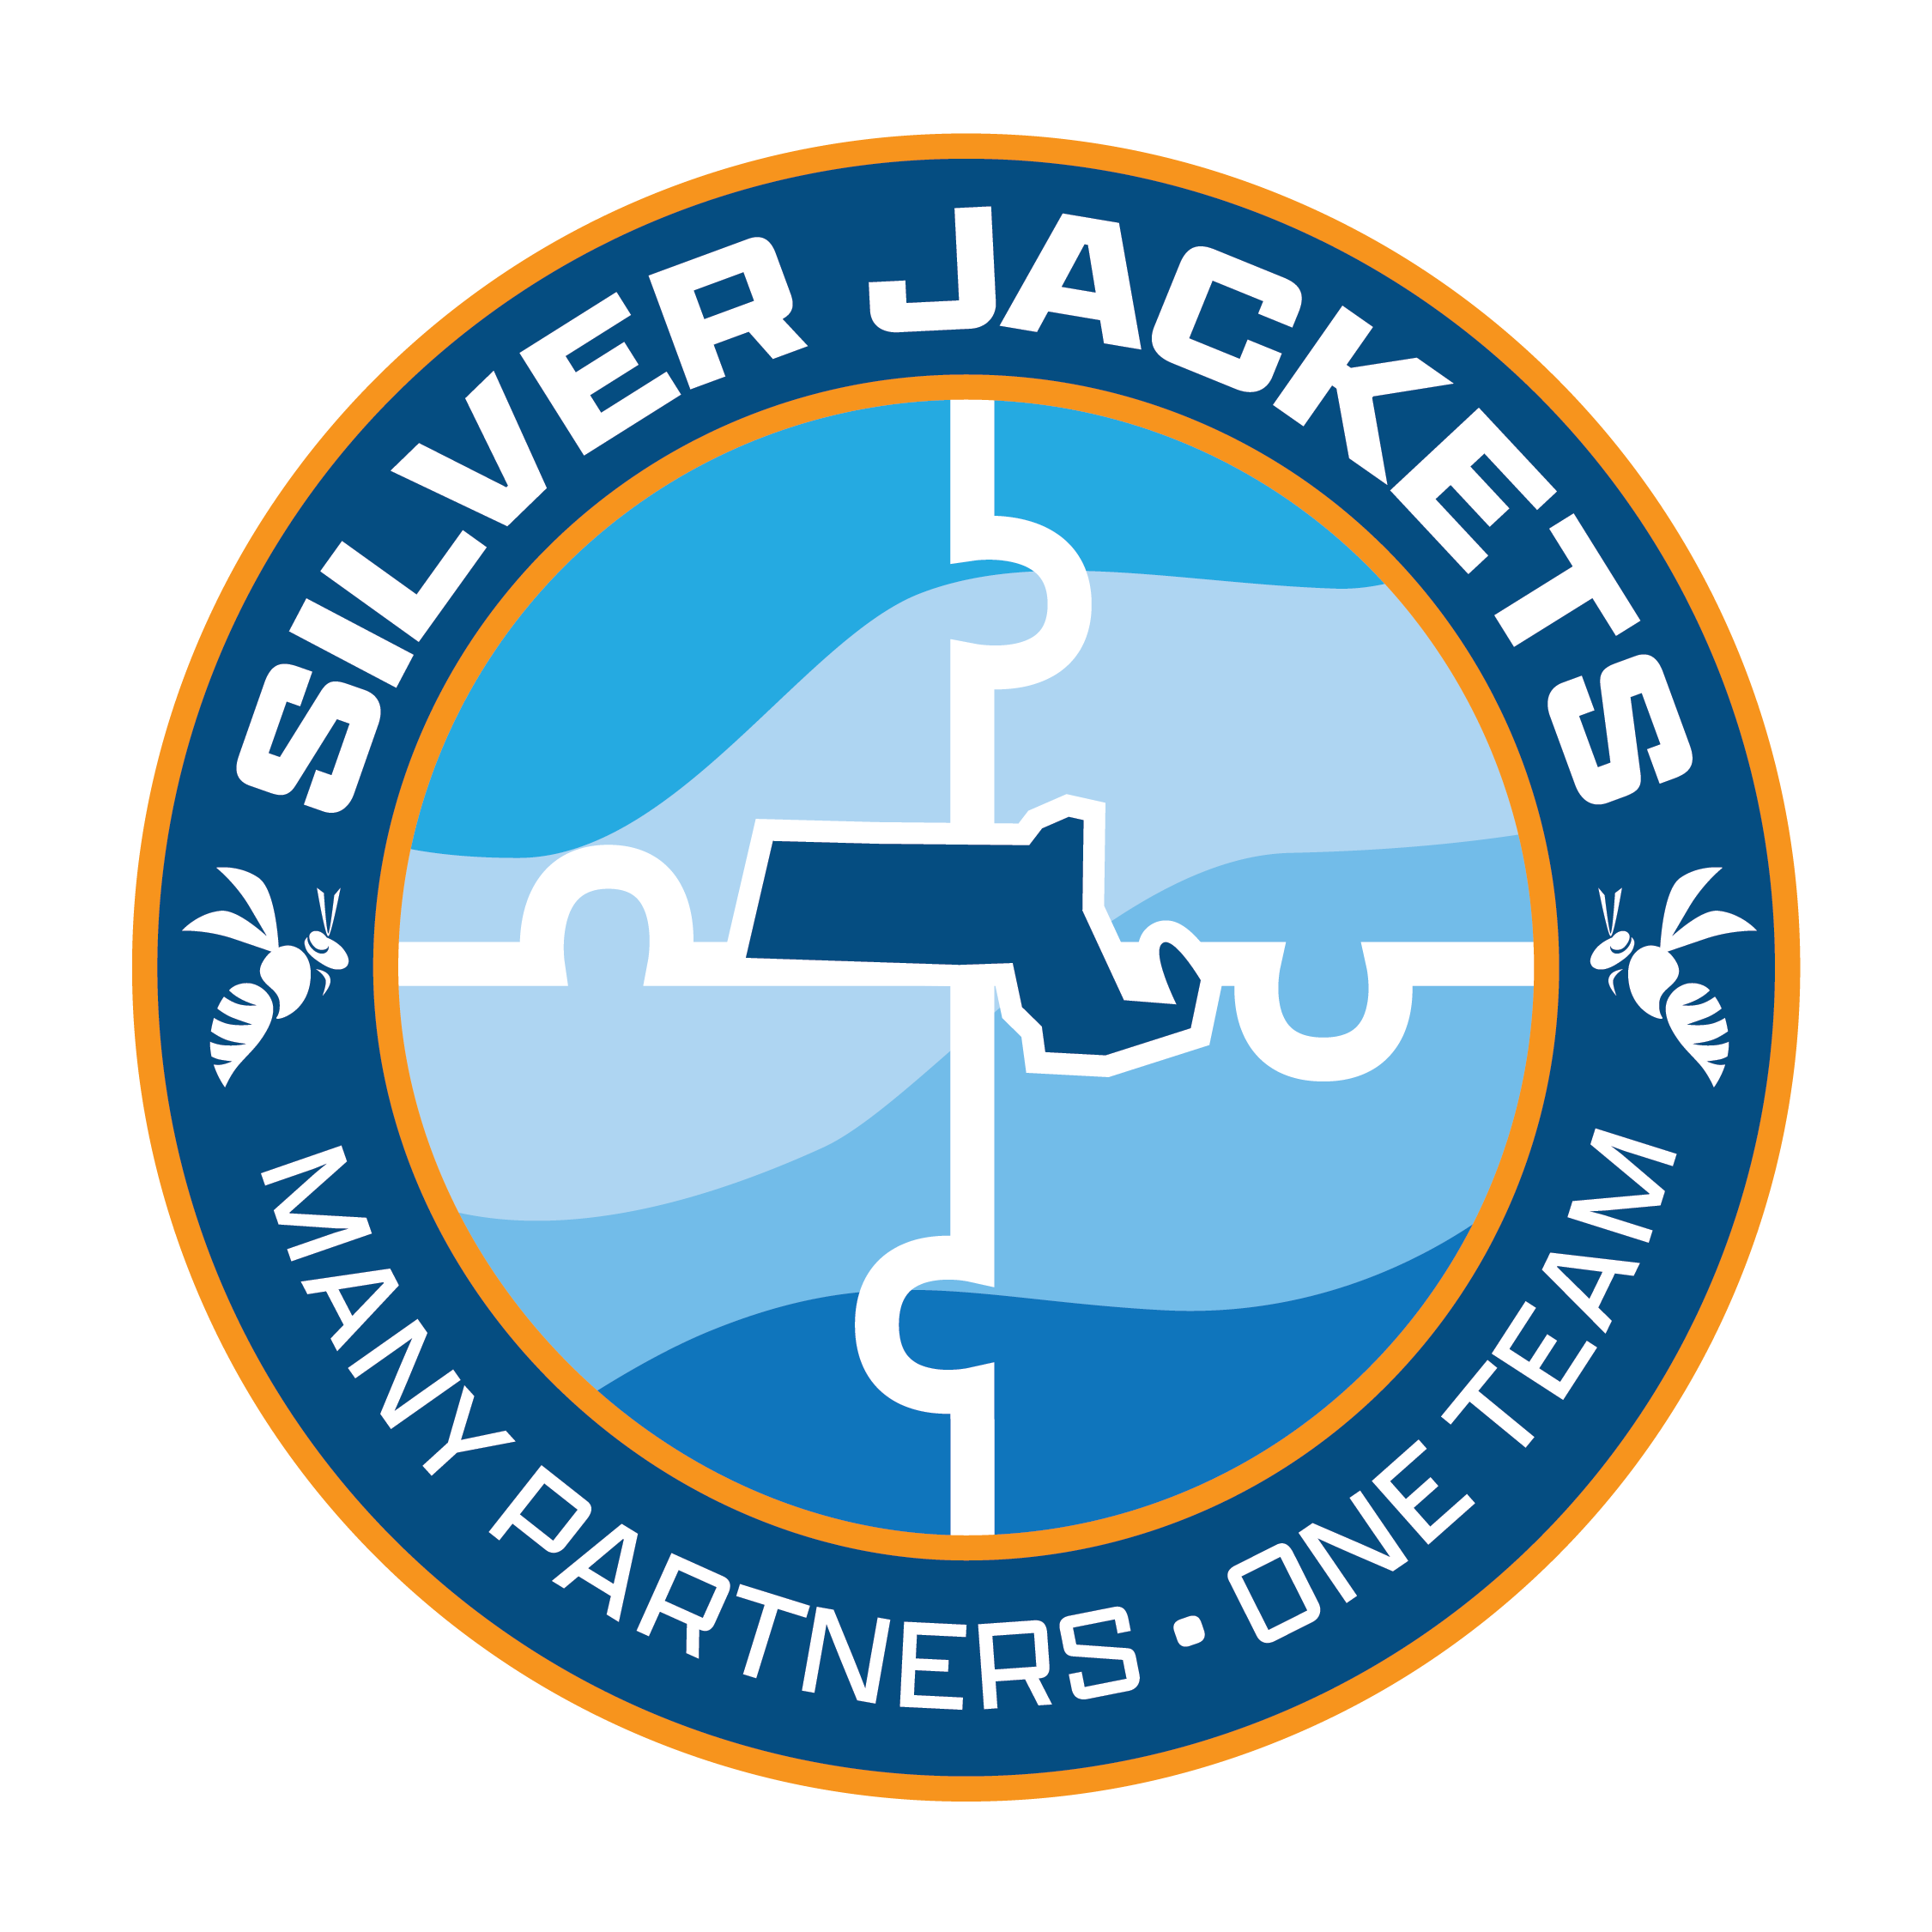 Massachusetts Silver Jackets logo